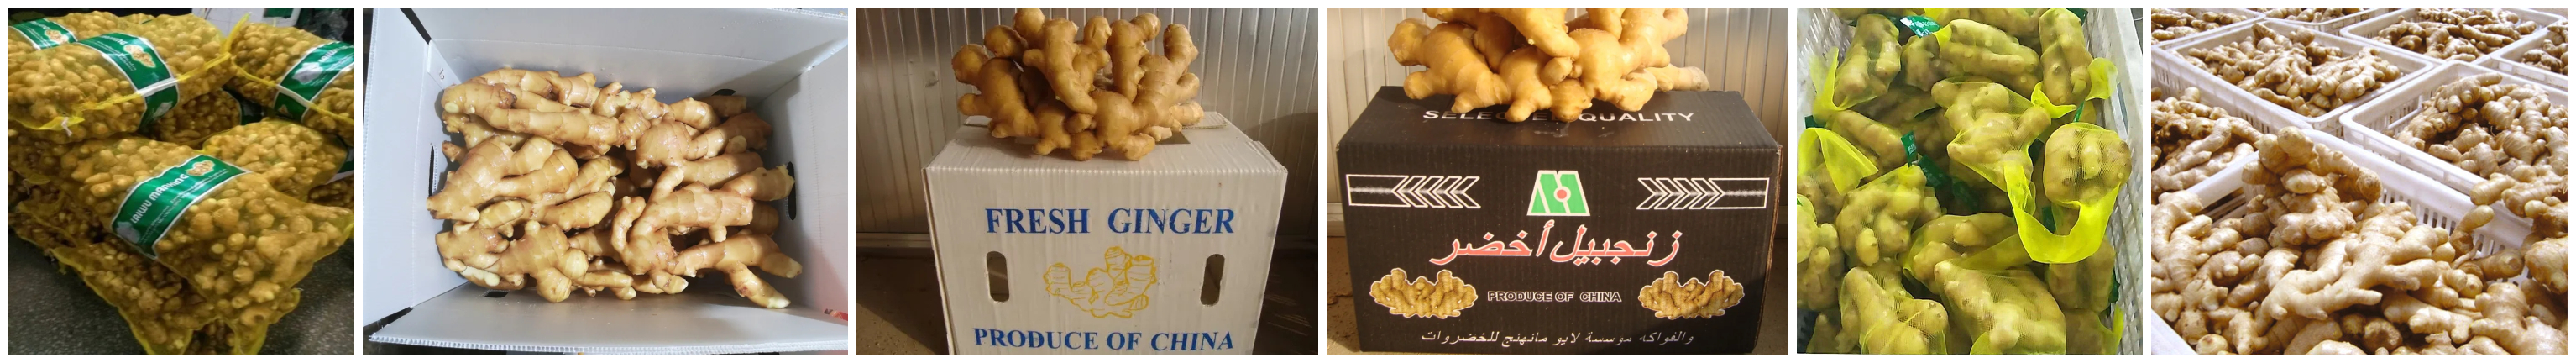 Ginger Packing